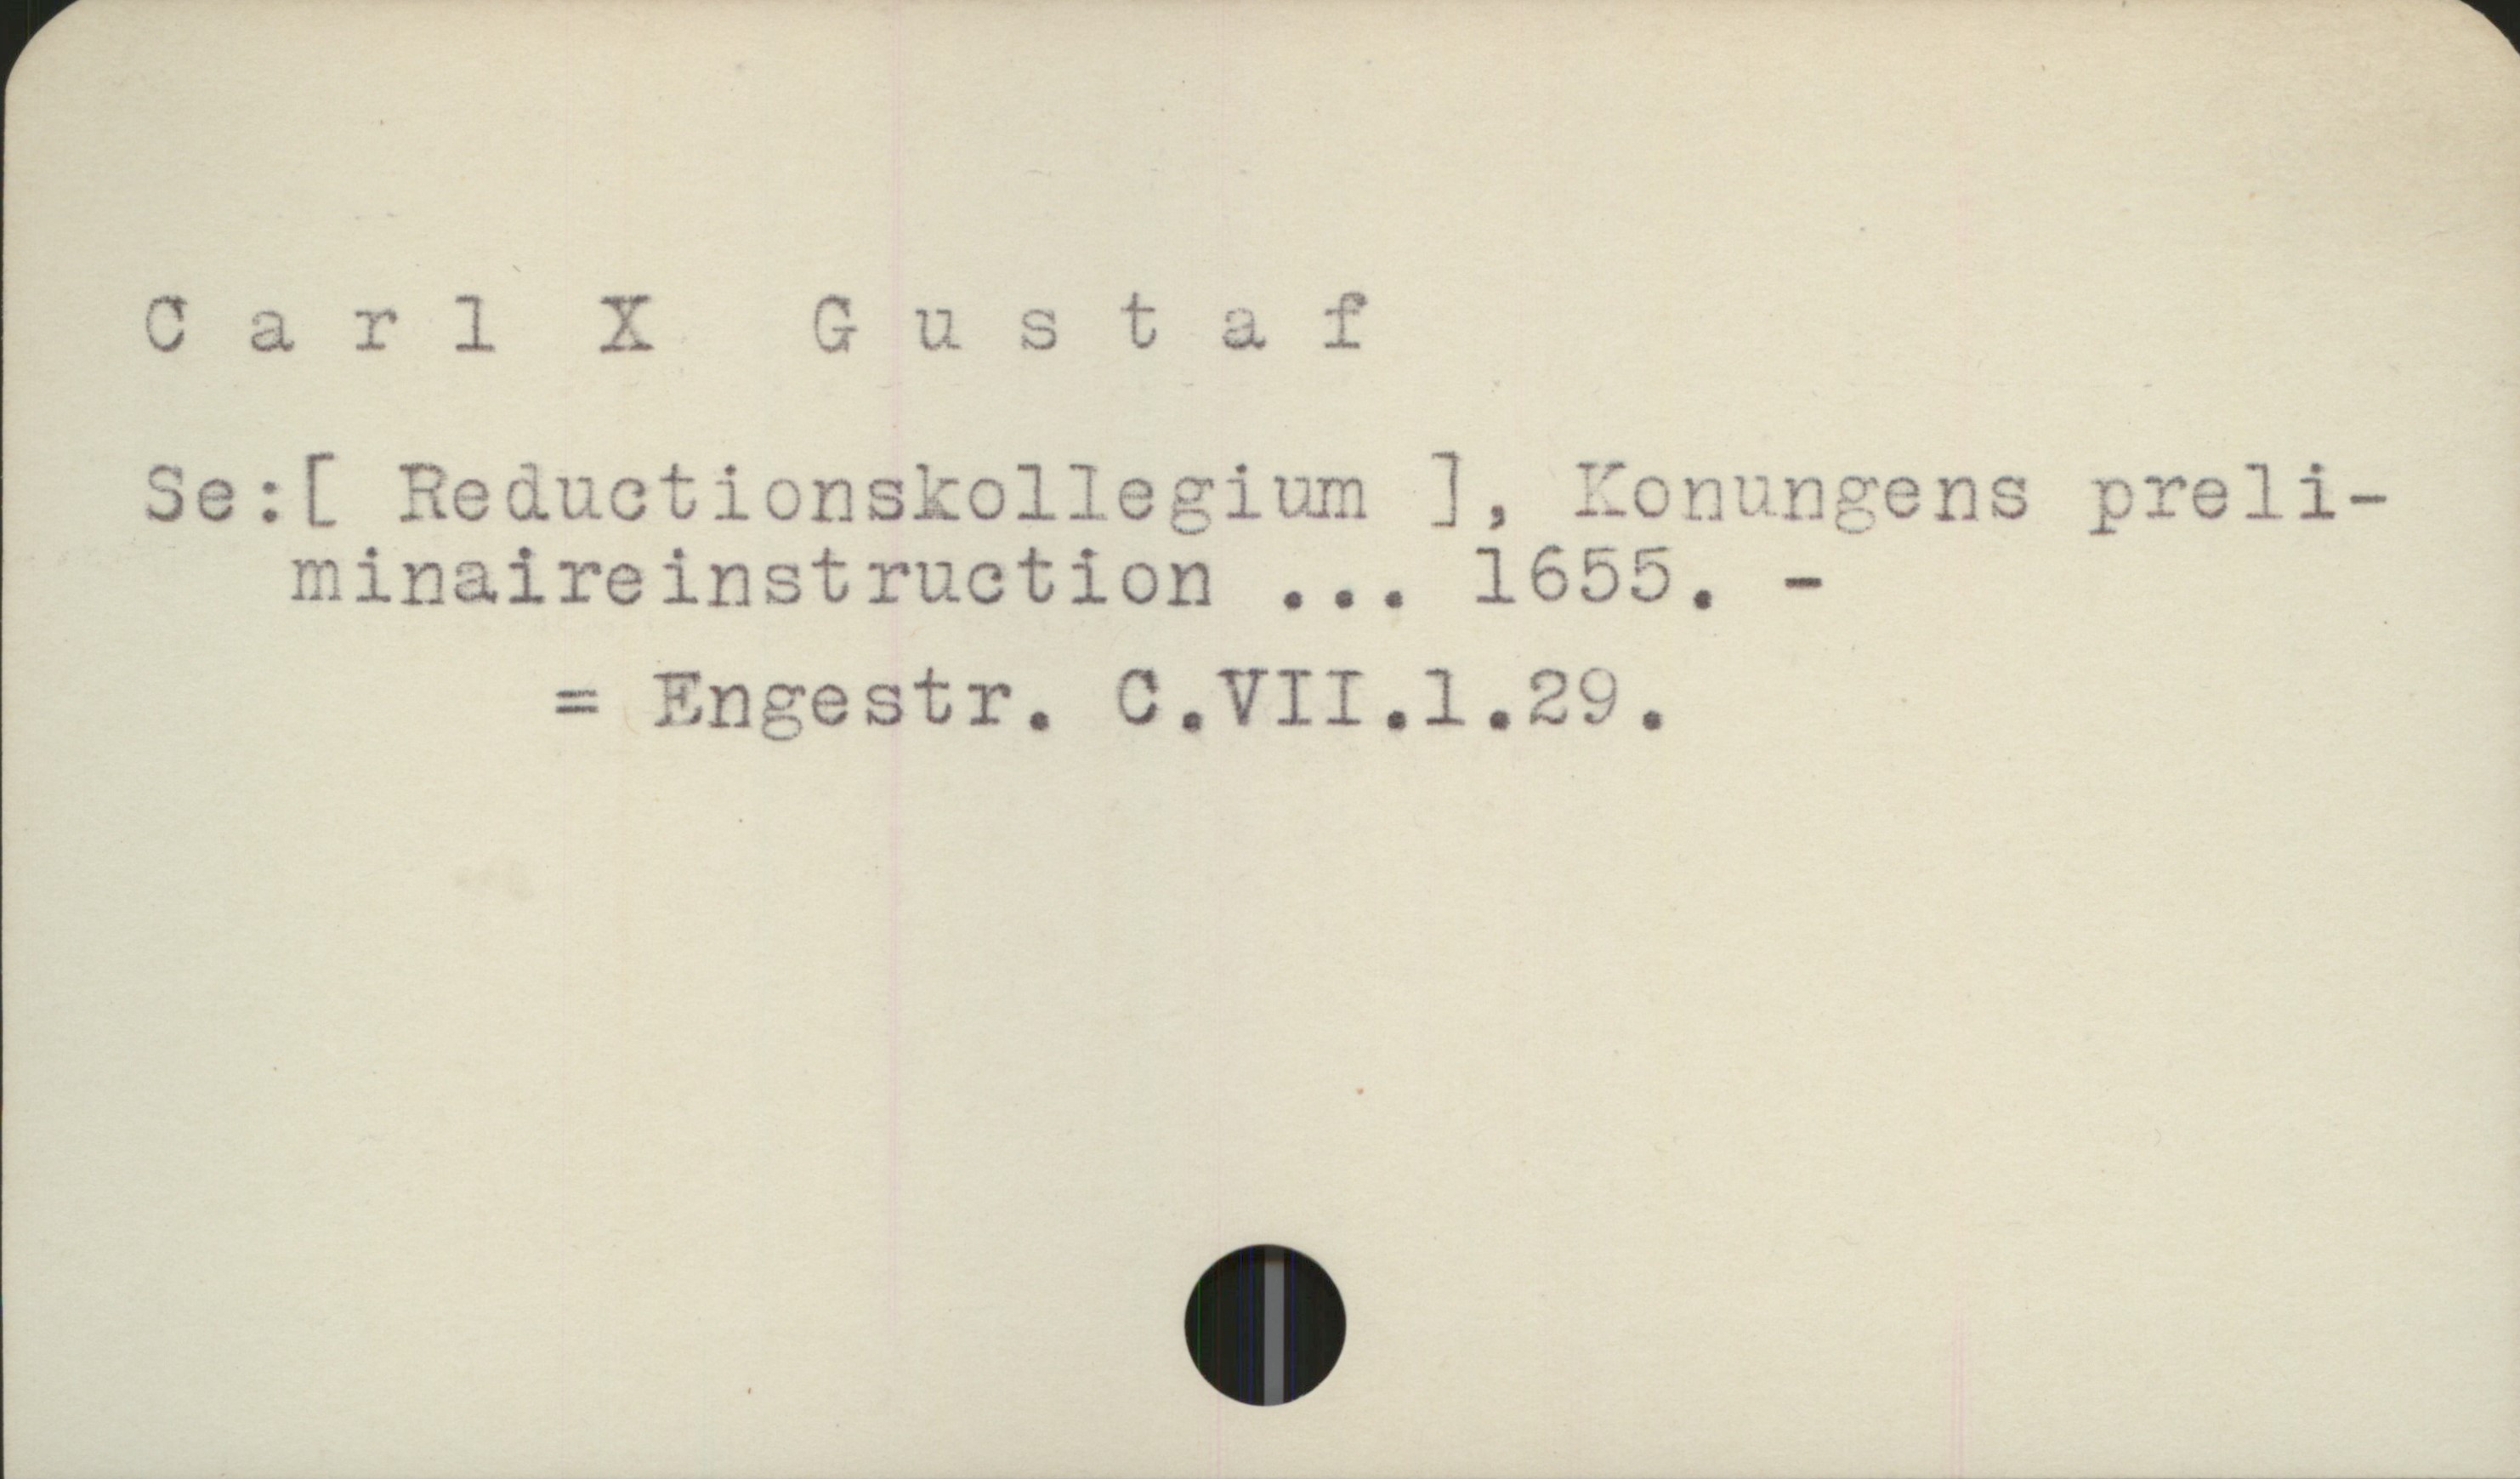  Carl X ^ustaf
Se:[ Reductionskollegzium 1, Zorunzens pveli-
minaireinstruction ... 1655. - _
= Engestr. C.VIl.l.2v.

